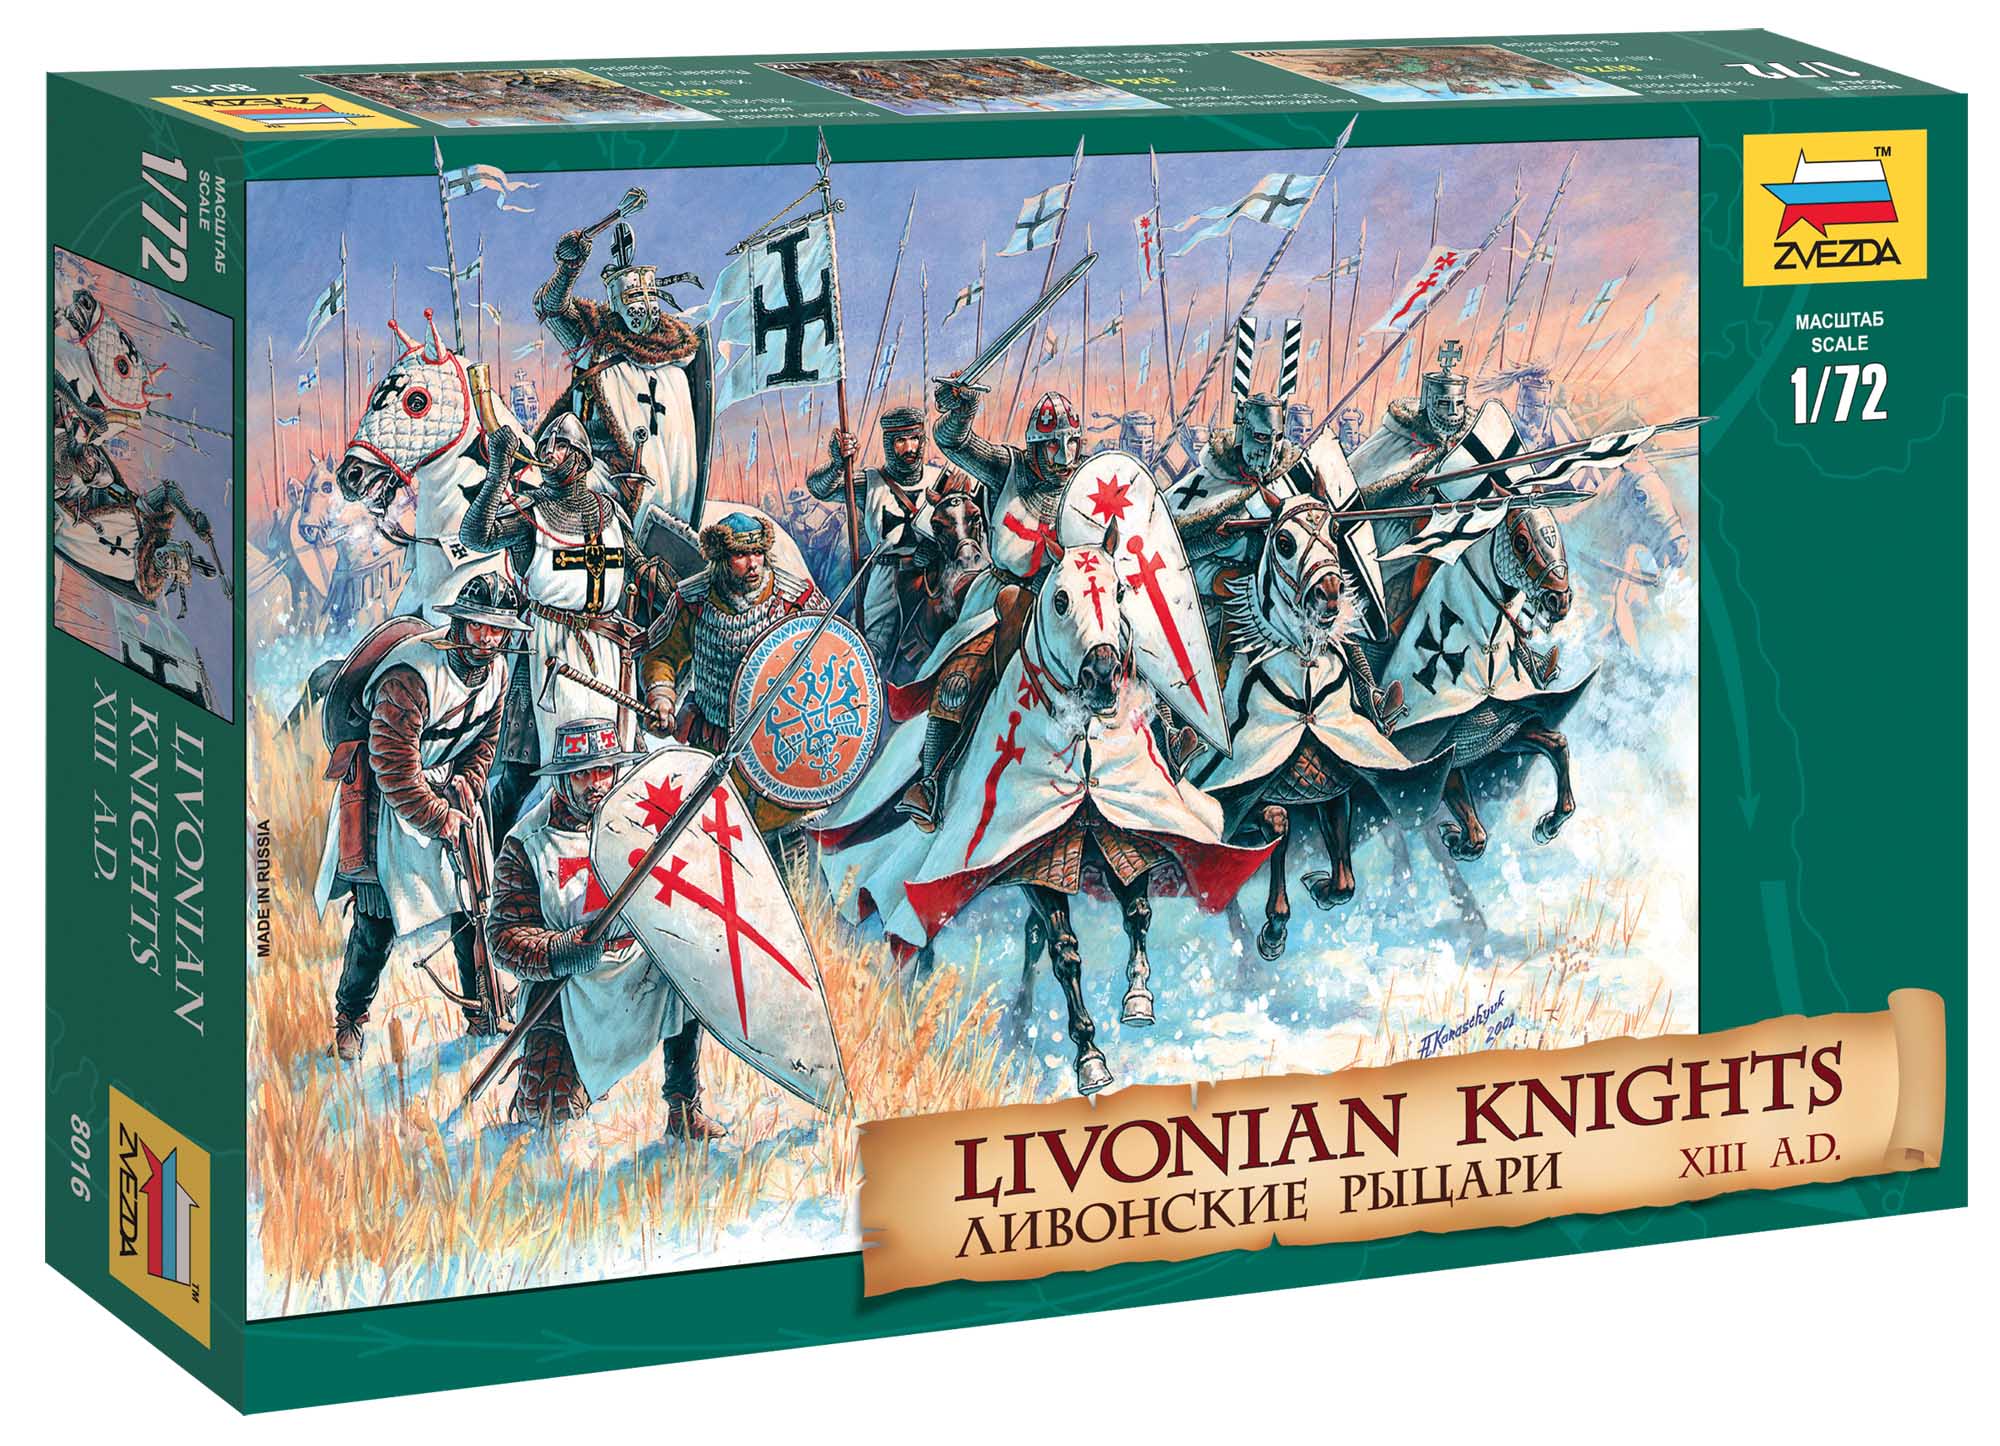 Livonian Knights XIII-XIV A.D.